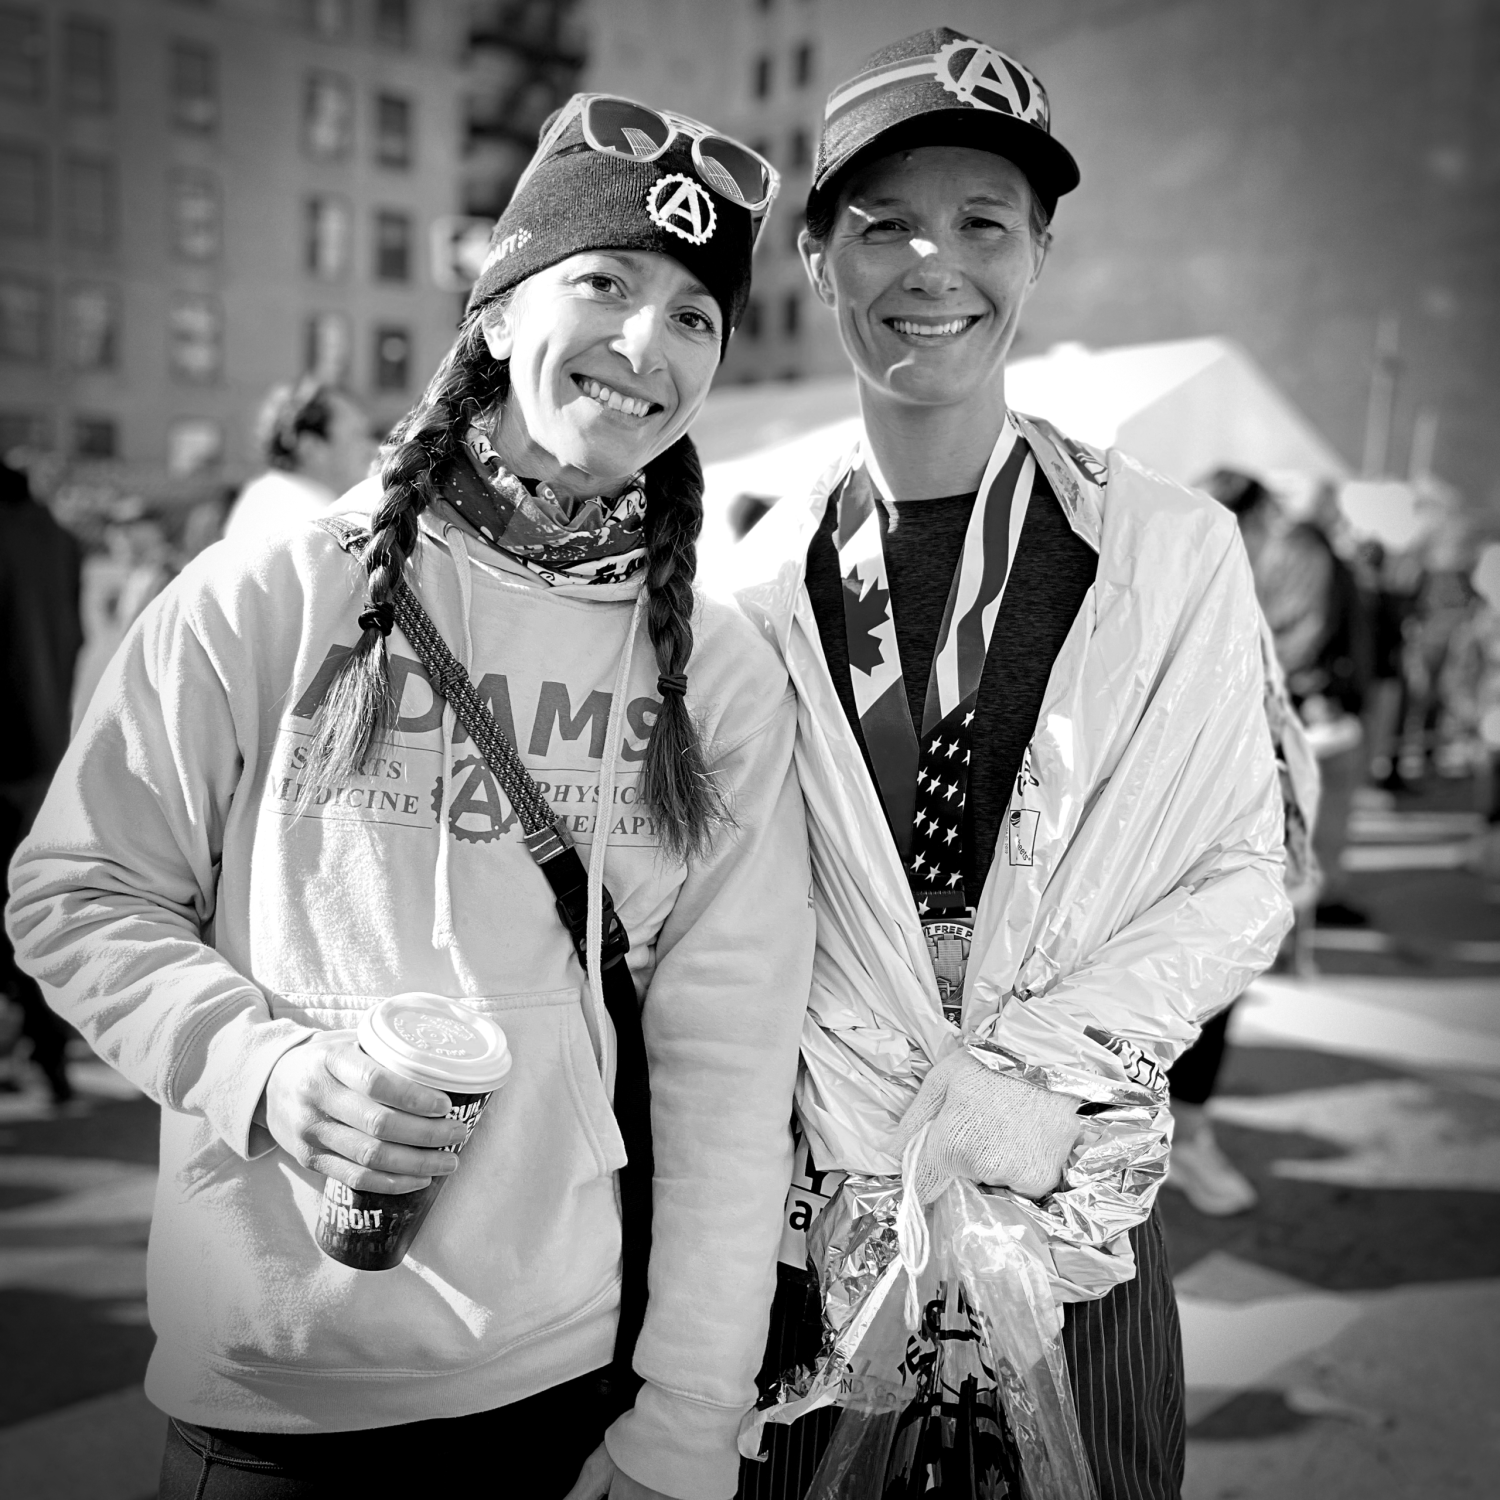 Madeline and Hannah at the Detroit Marathon